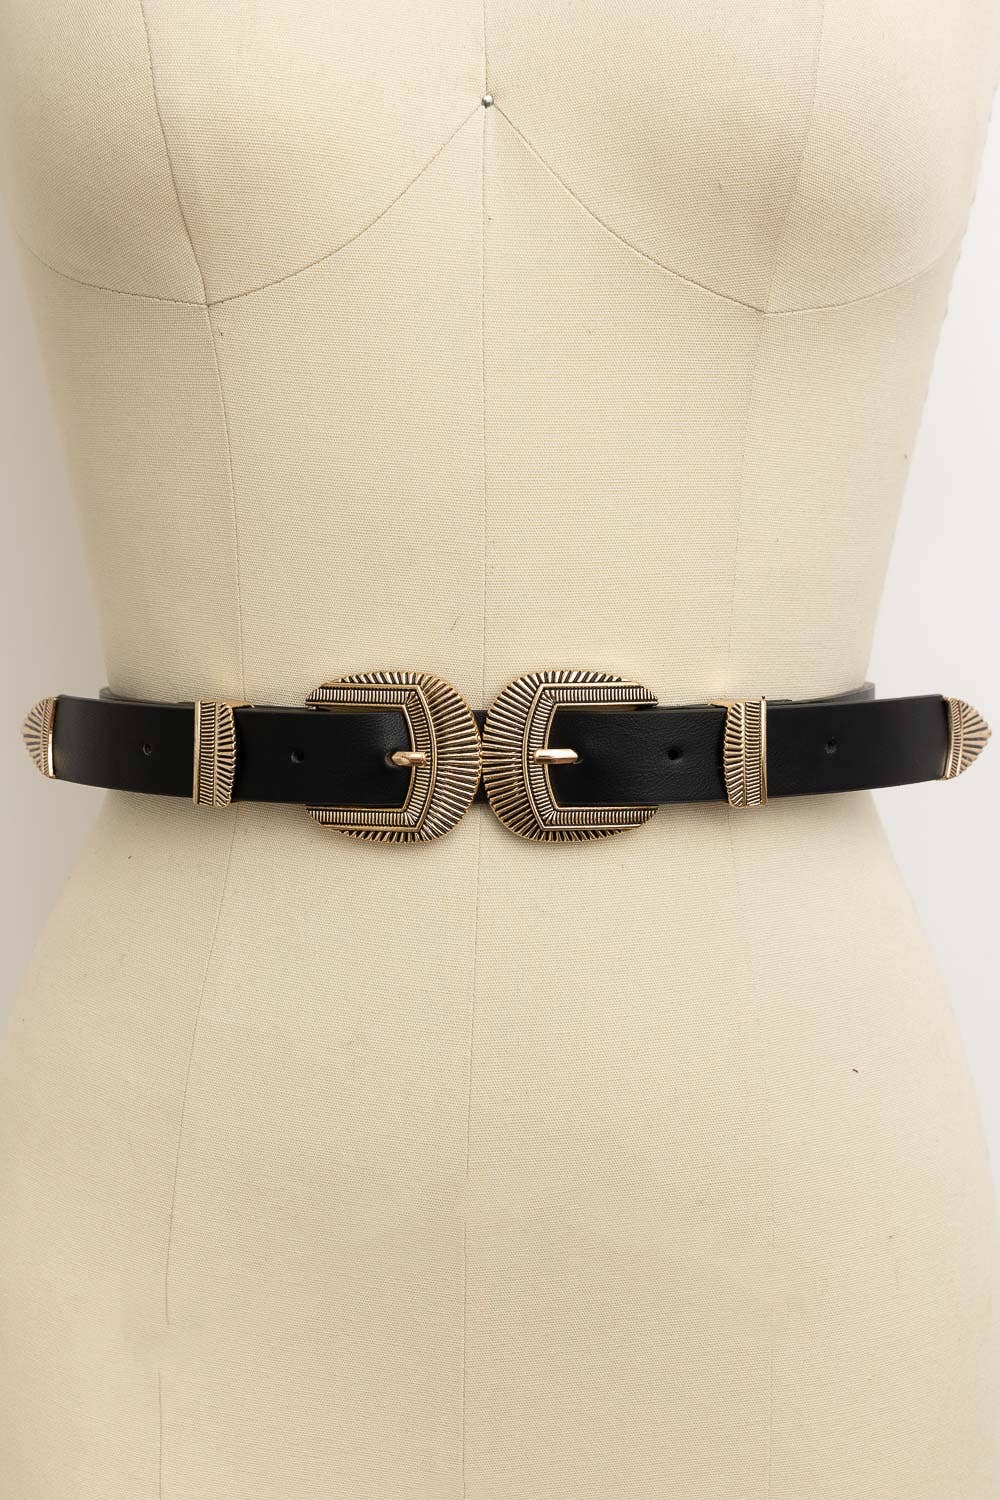 Double Buckle Faux Leather Western Style Belt